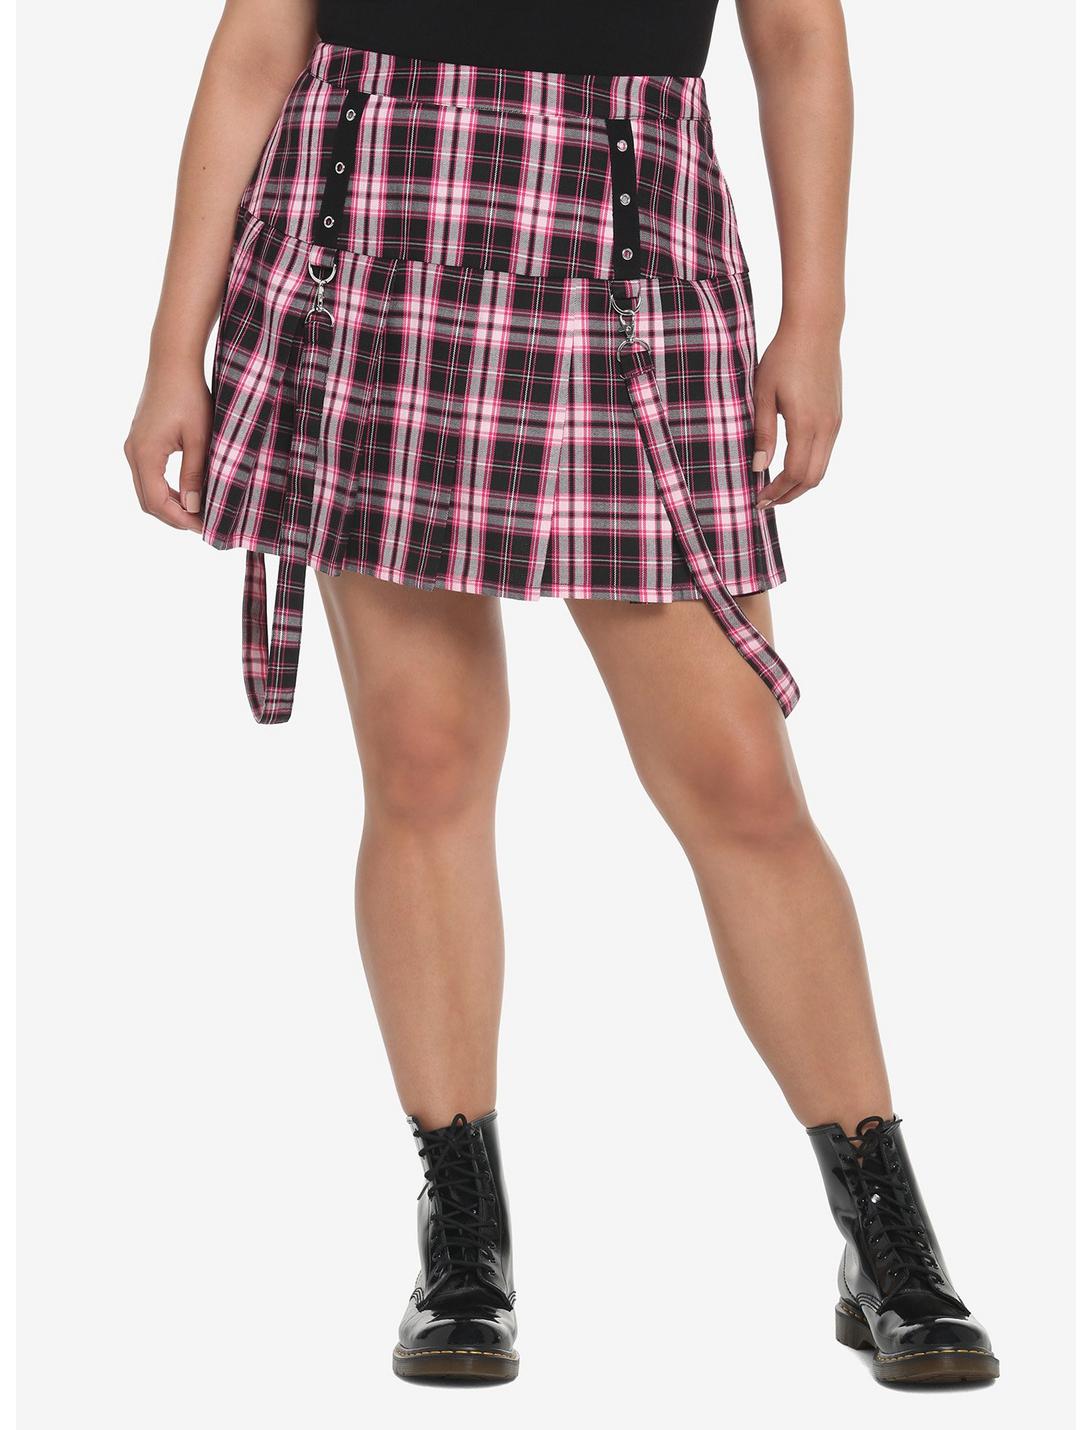 Black & Pink Plaid Pleated Suspender Skirt Plus Size, PLAID - PINK, hi-res